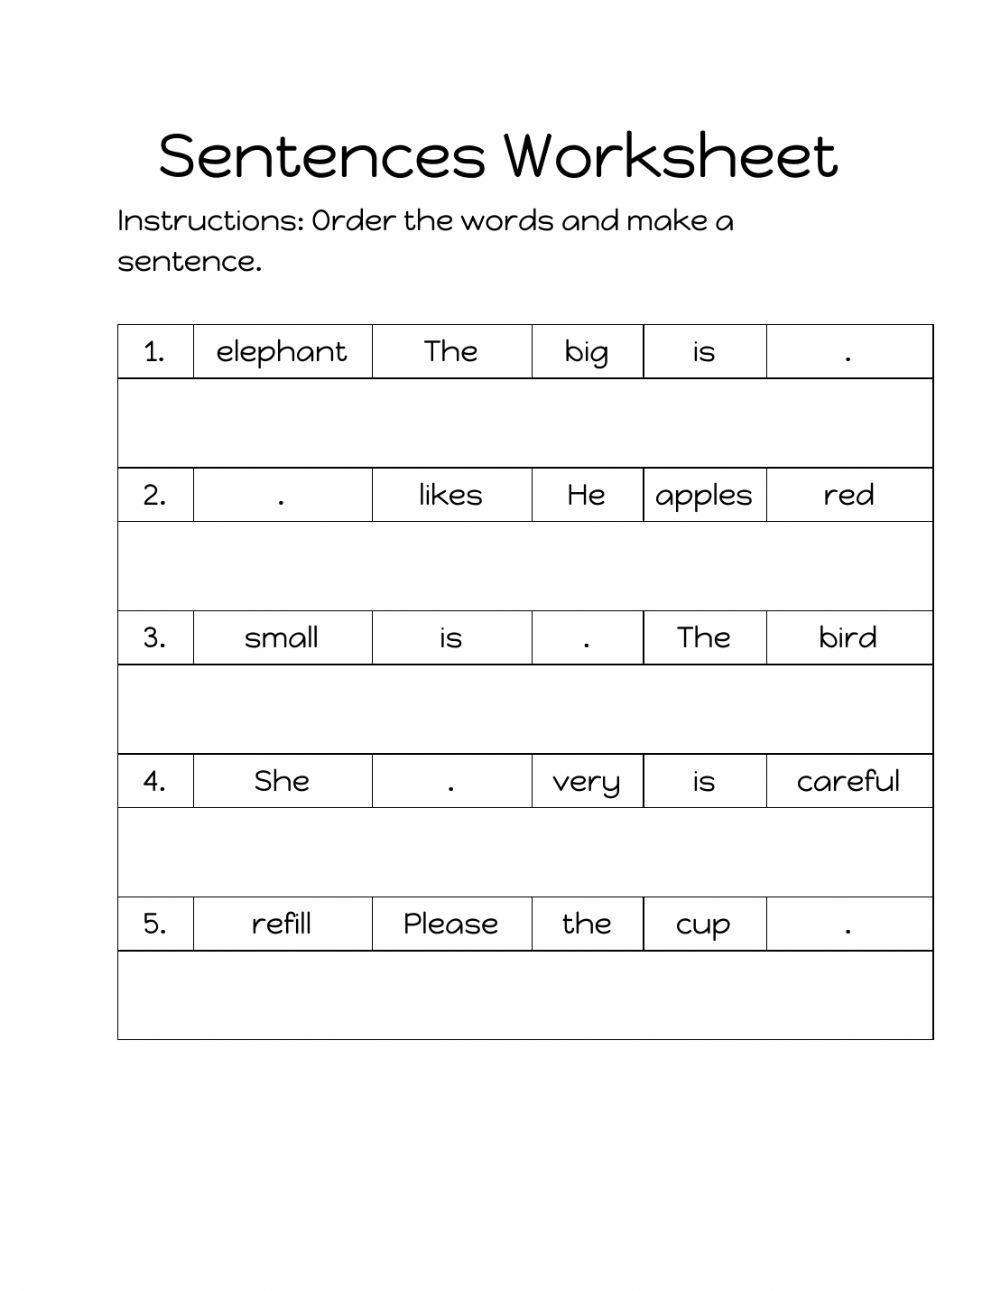 Week 2 Sentences